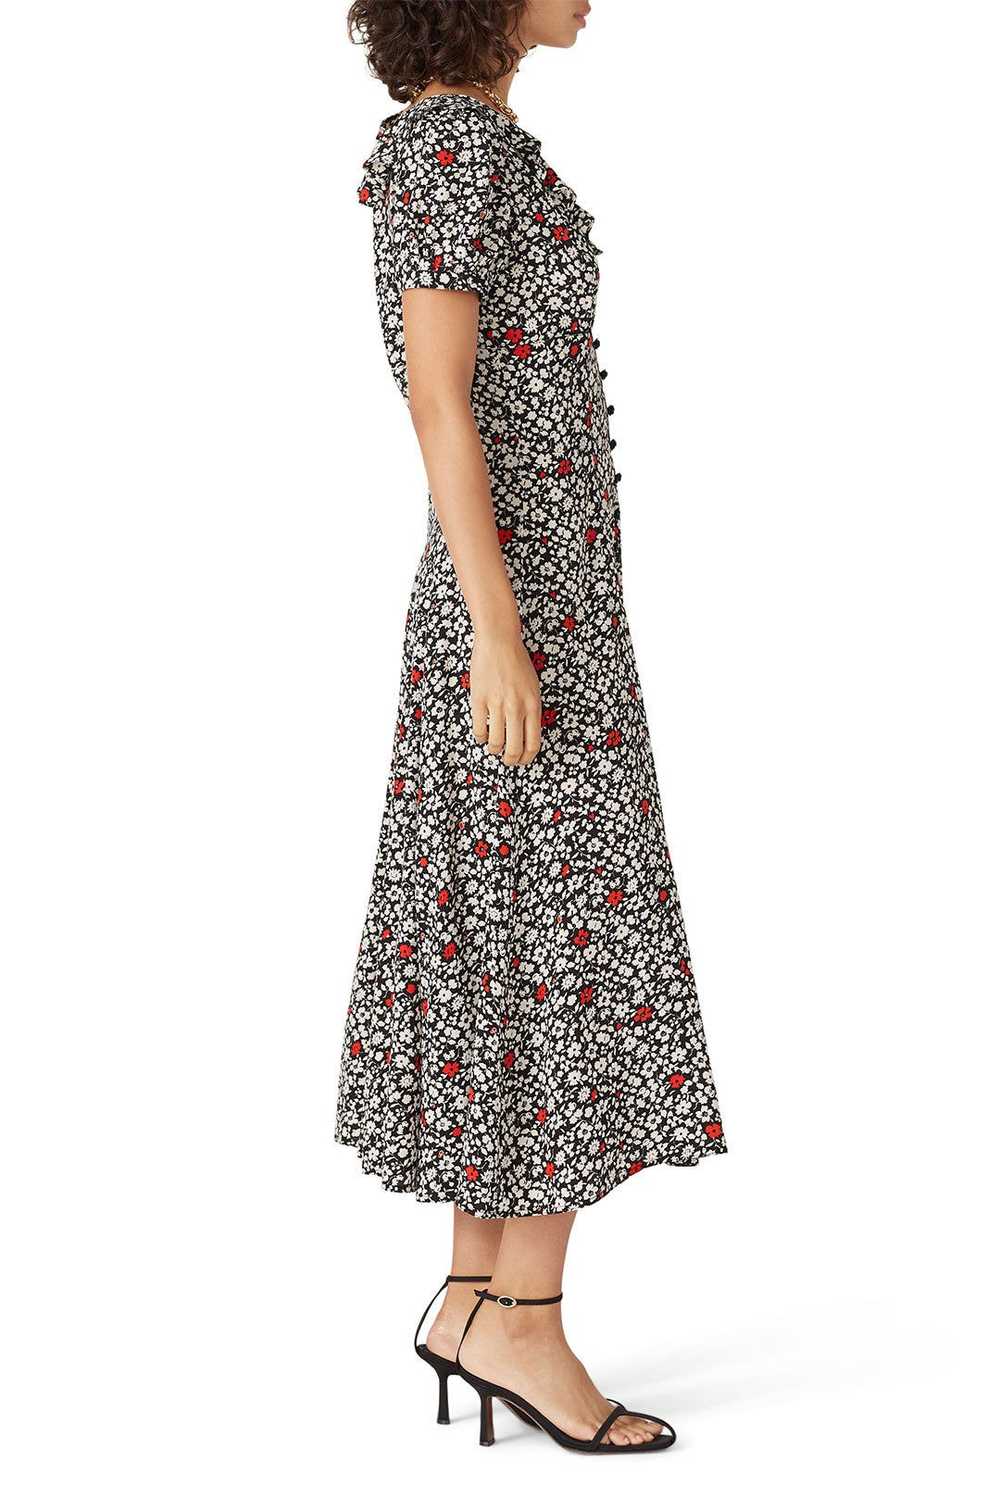 Polo Ralph Lauren Black Floral Short Sleeves Dress - image 2